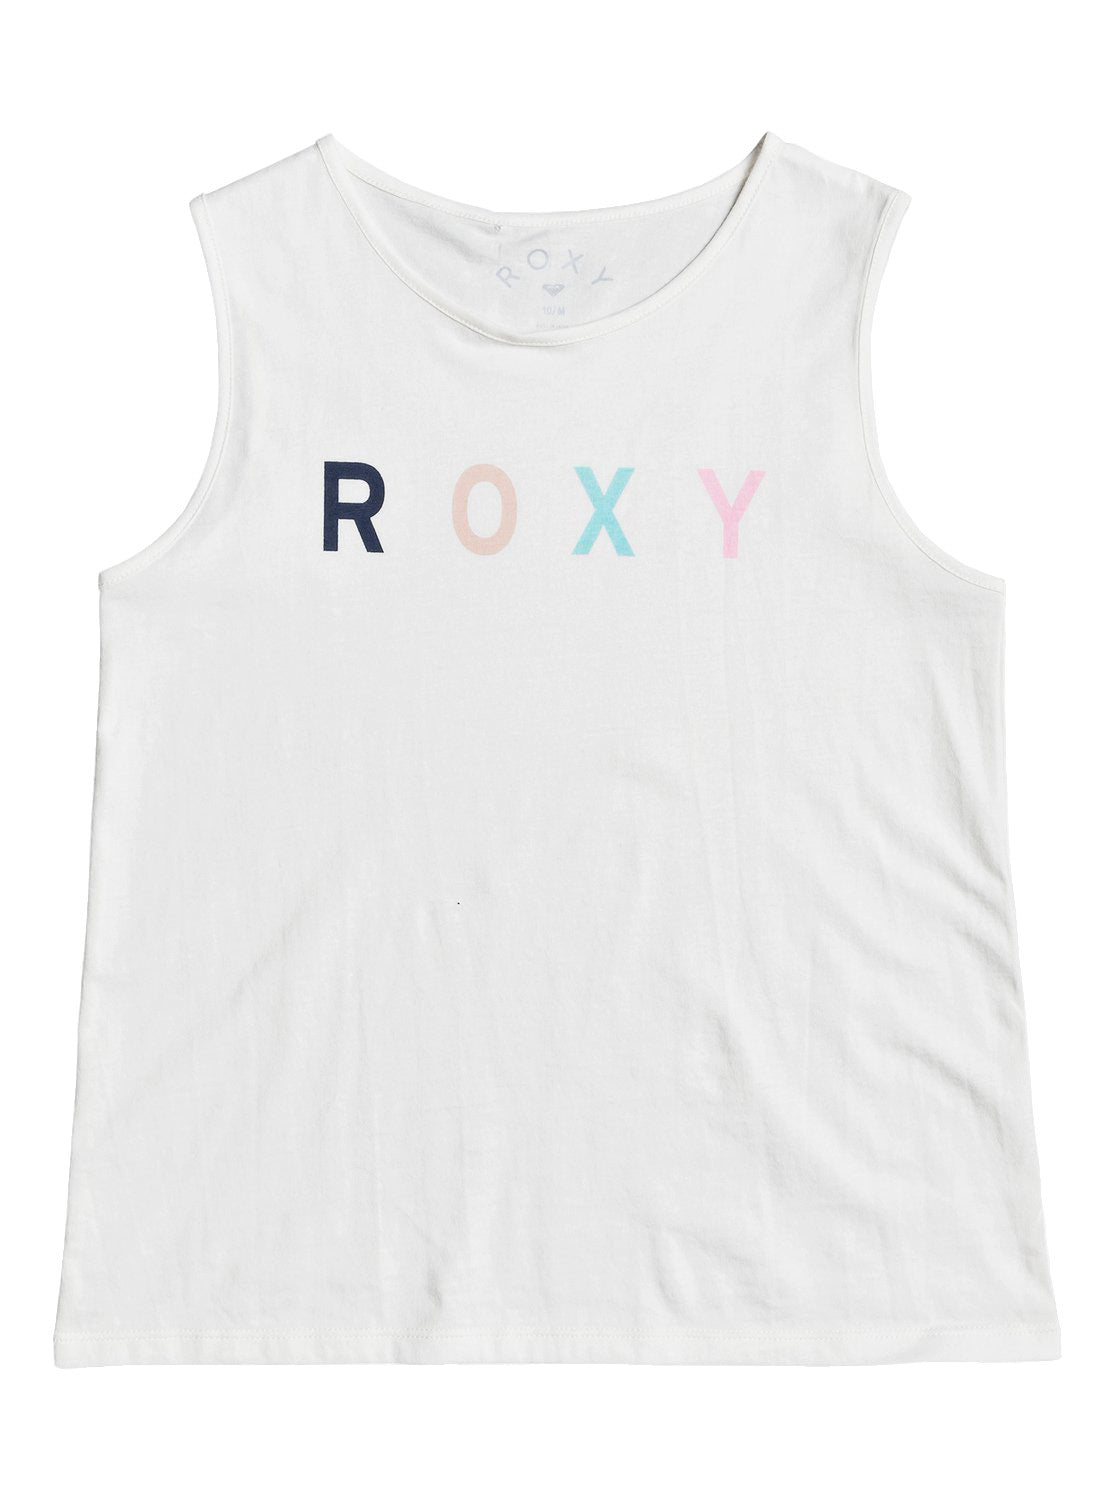 Roxy Girls All Your Love B Tank WBK0 10